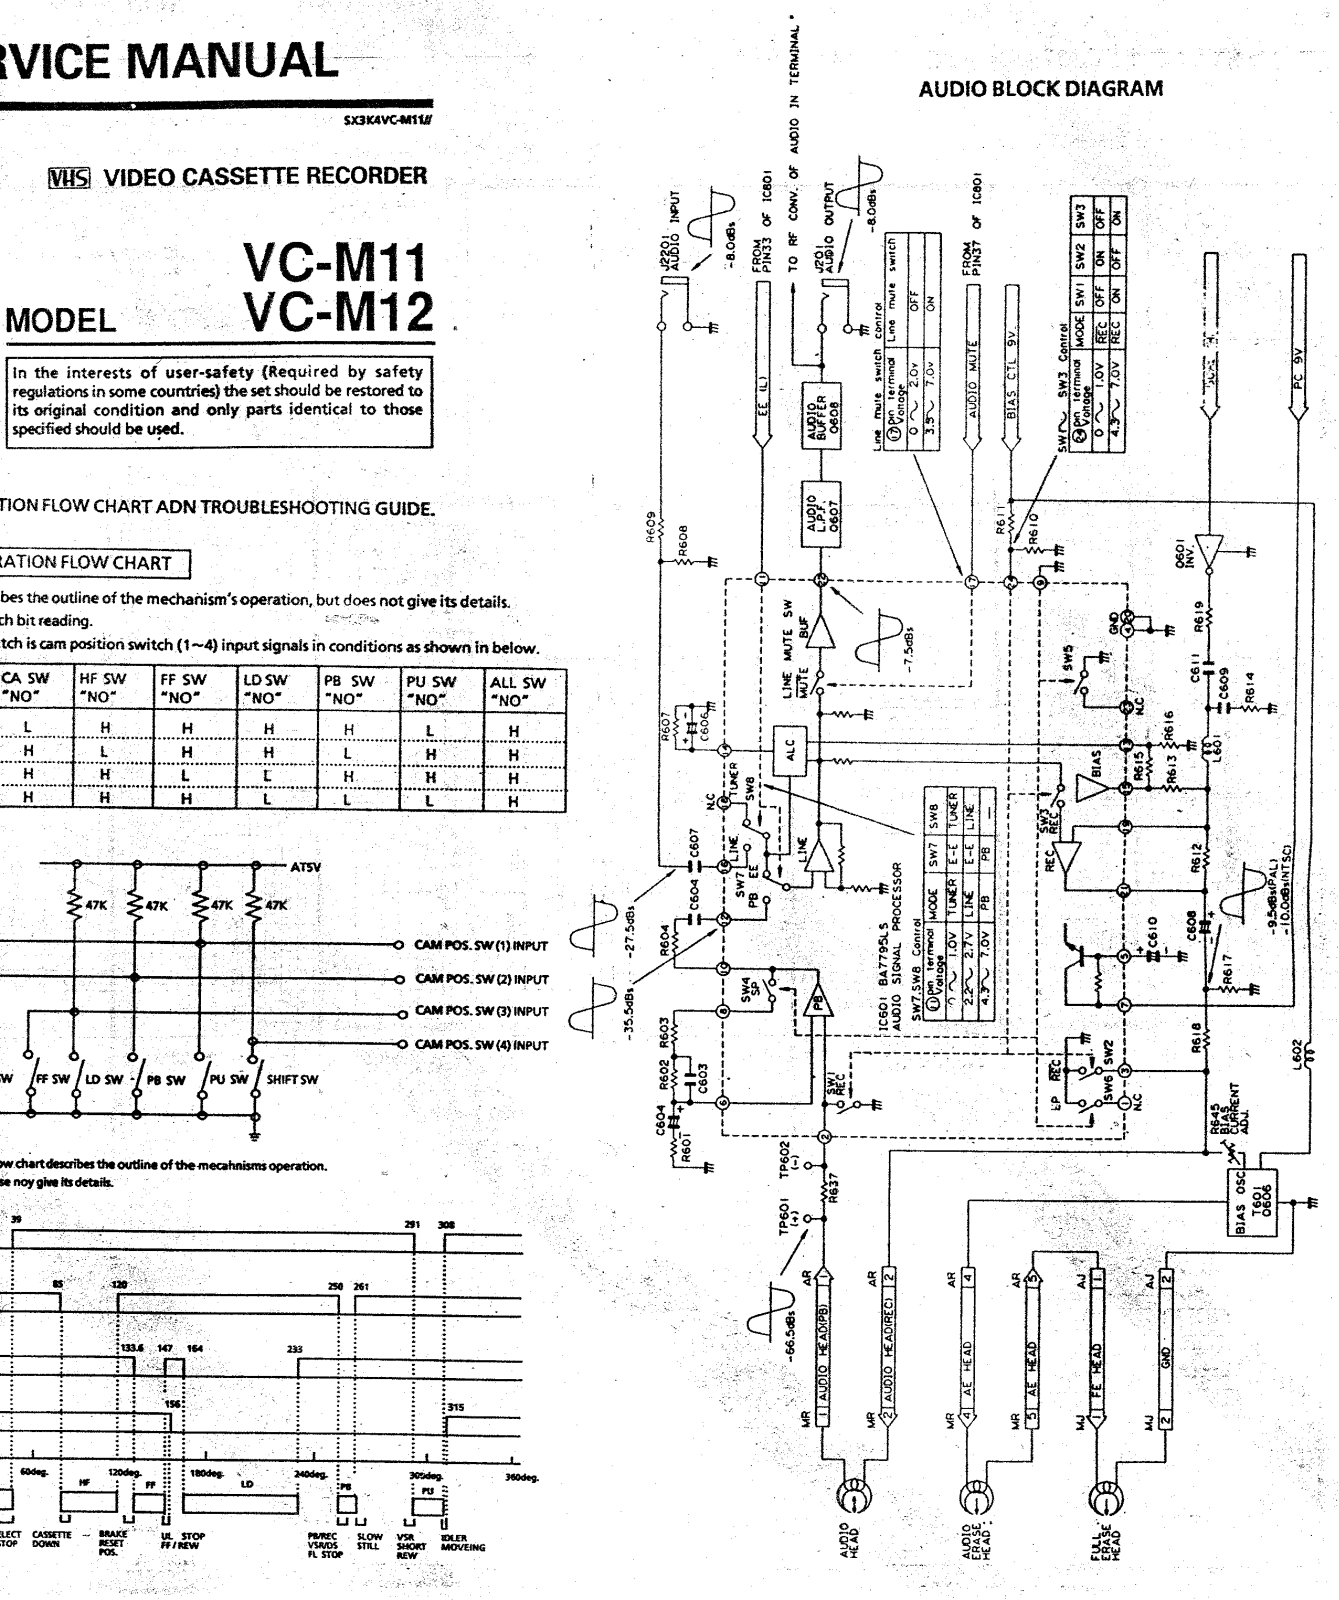 Sharp VC-M11, VC-M12 Schematic